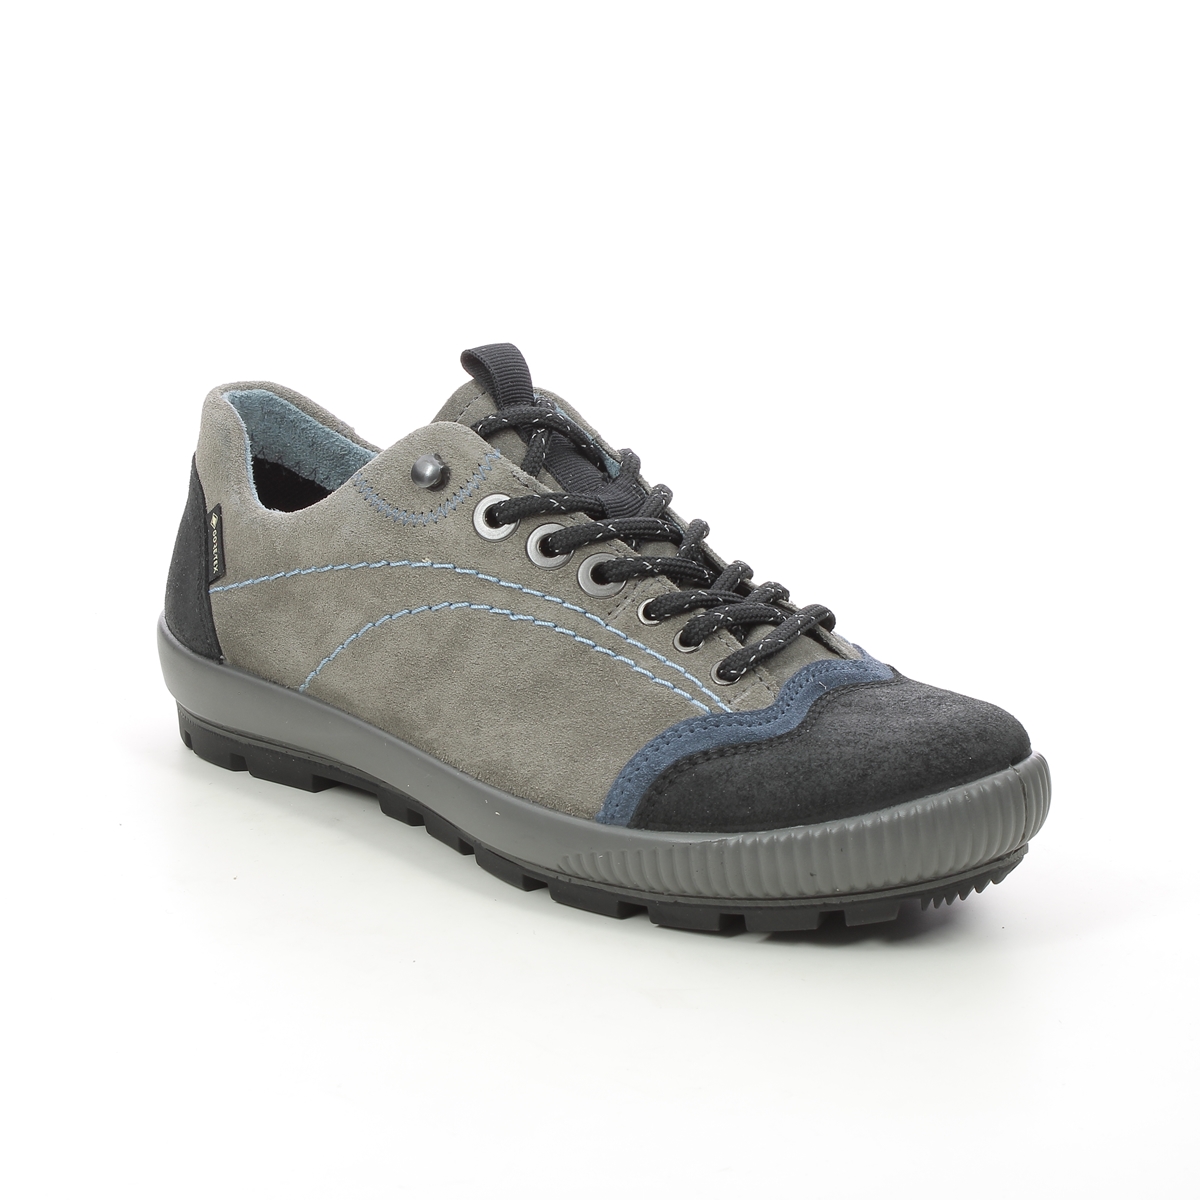 Legero Tanaro Trek Gtx Grey Suede Womens Walking Shoes 2000122-2800 In Size 5.5 In Plain Grey Suede